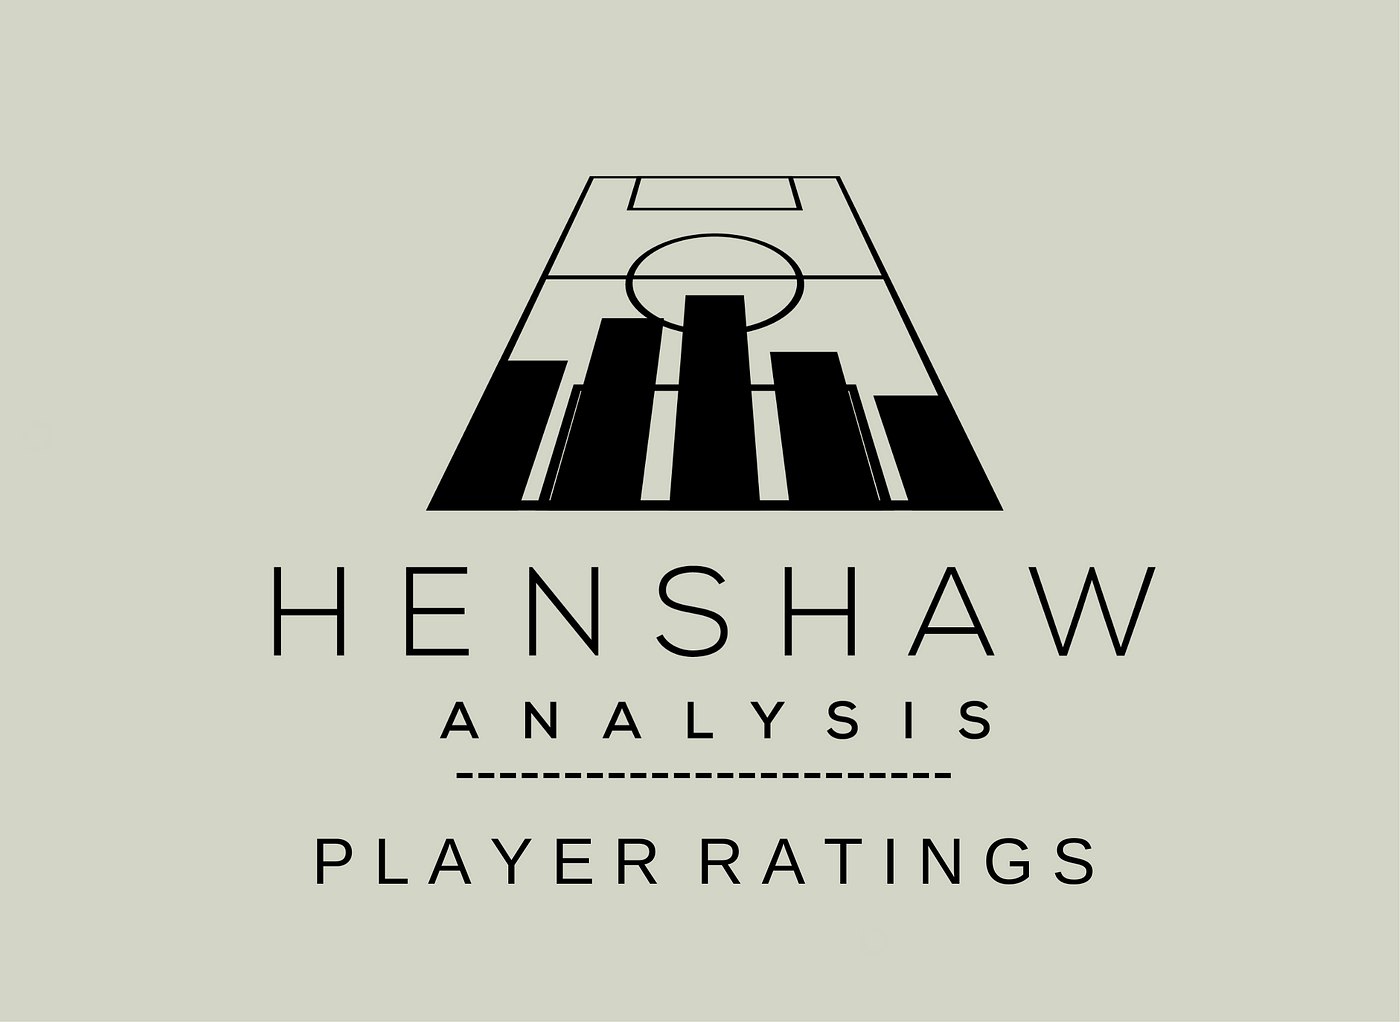 Player Ratings